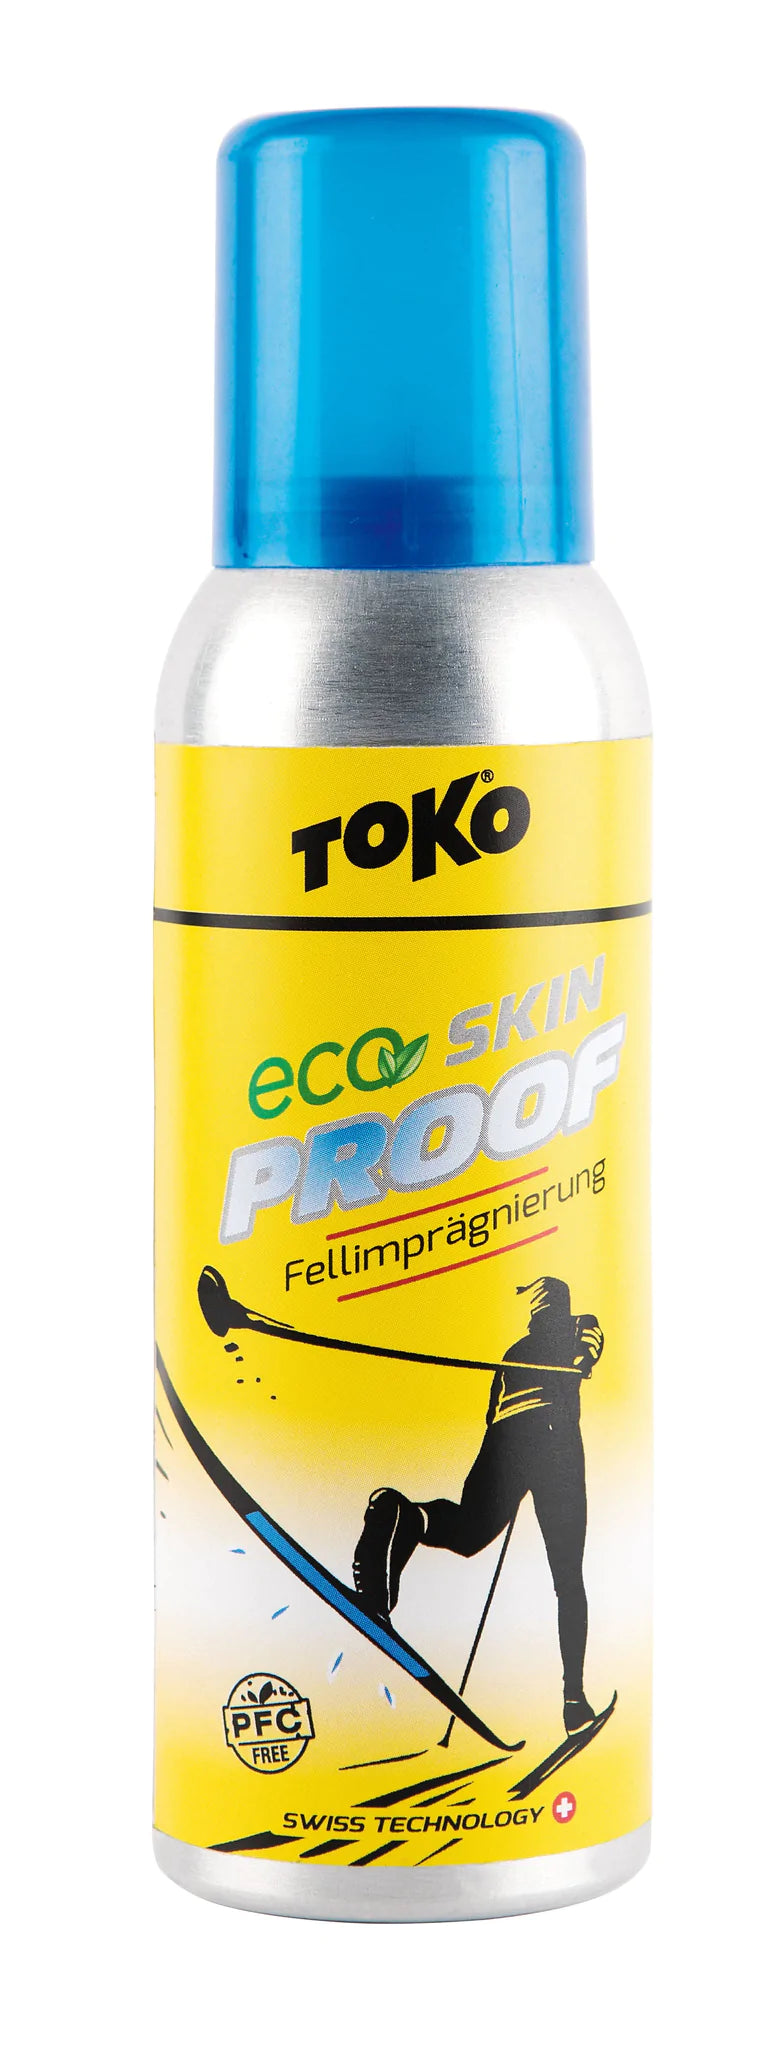 Toko Eco Skin Proof - 100ml